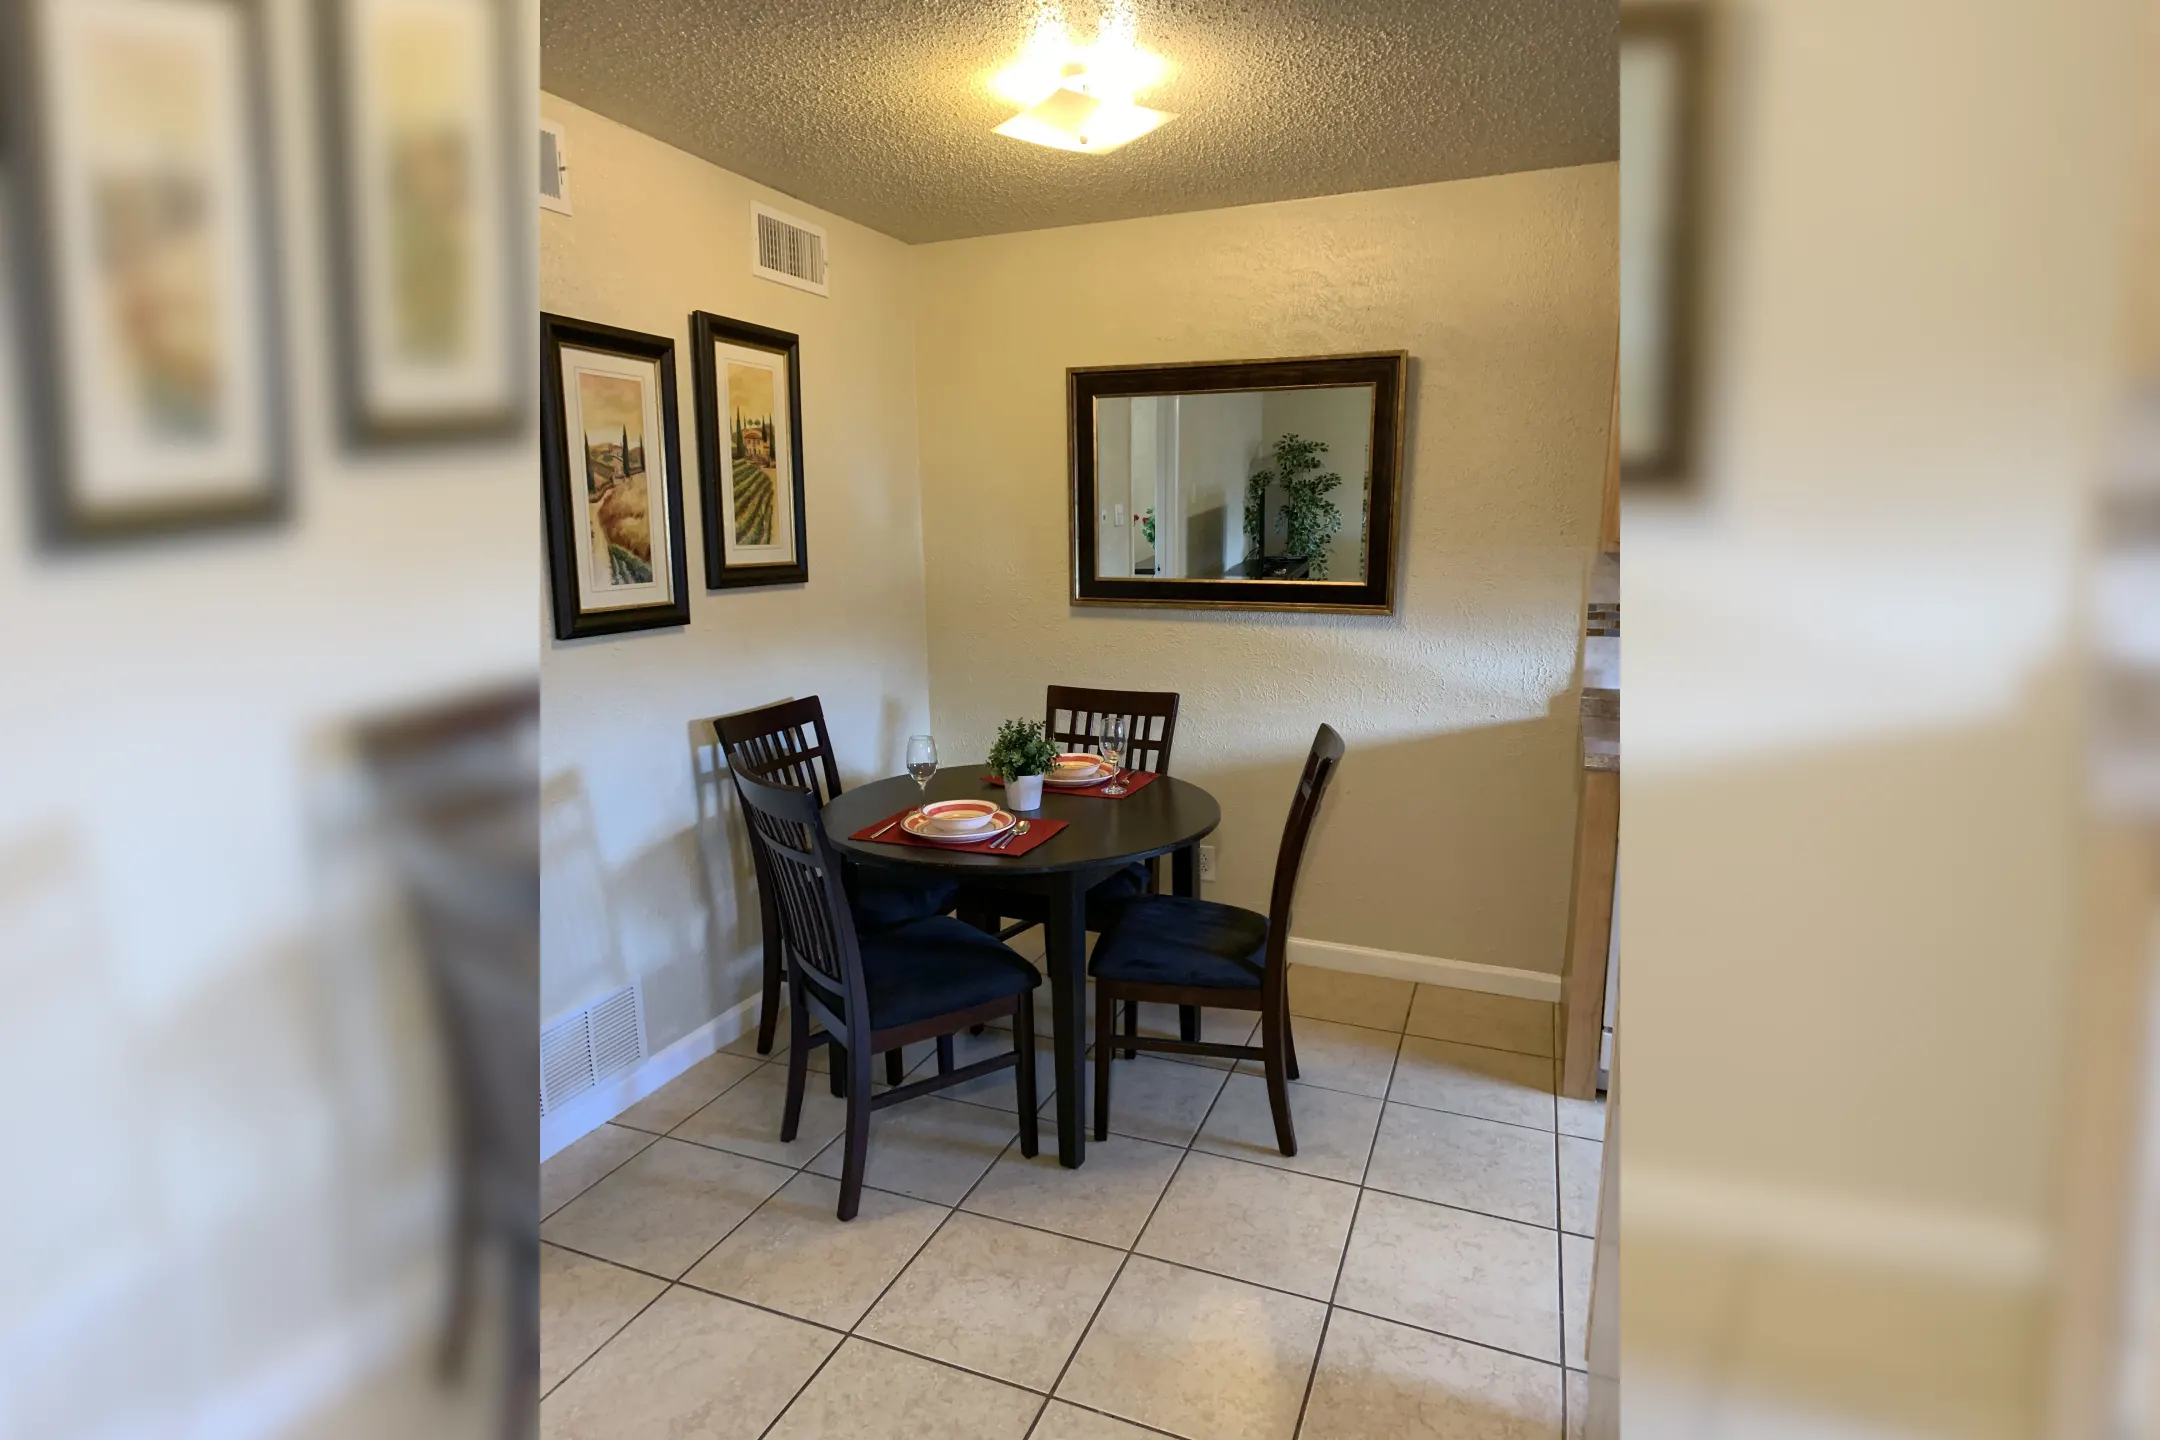 Dining Room - Eastgate Ridge Apartments - Killeen, TX